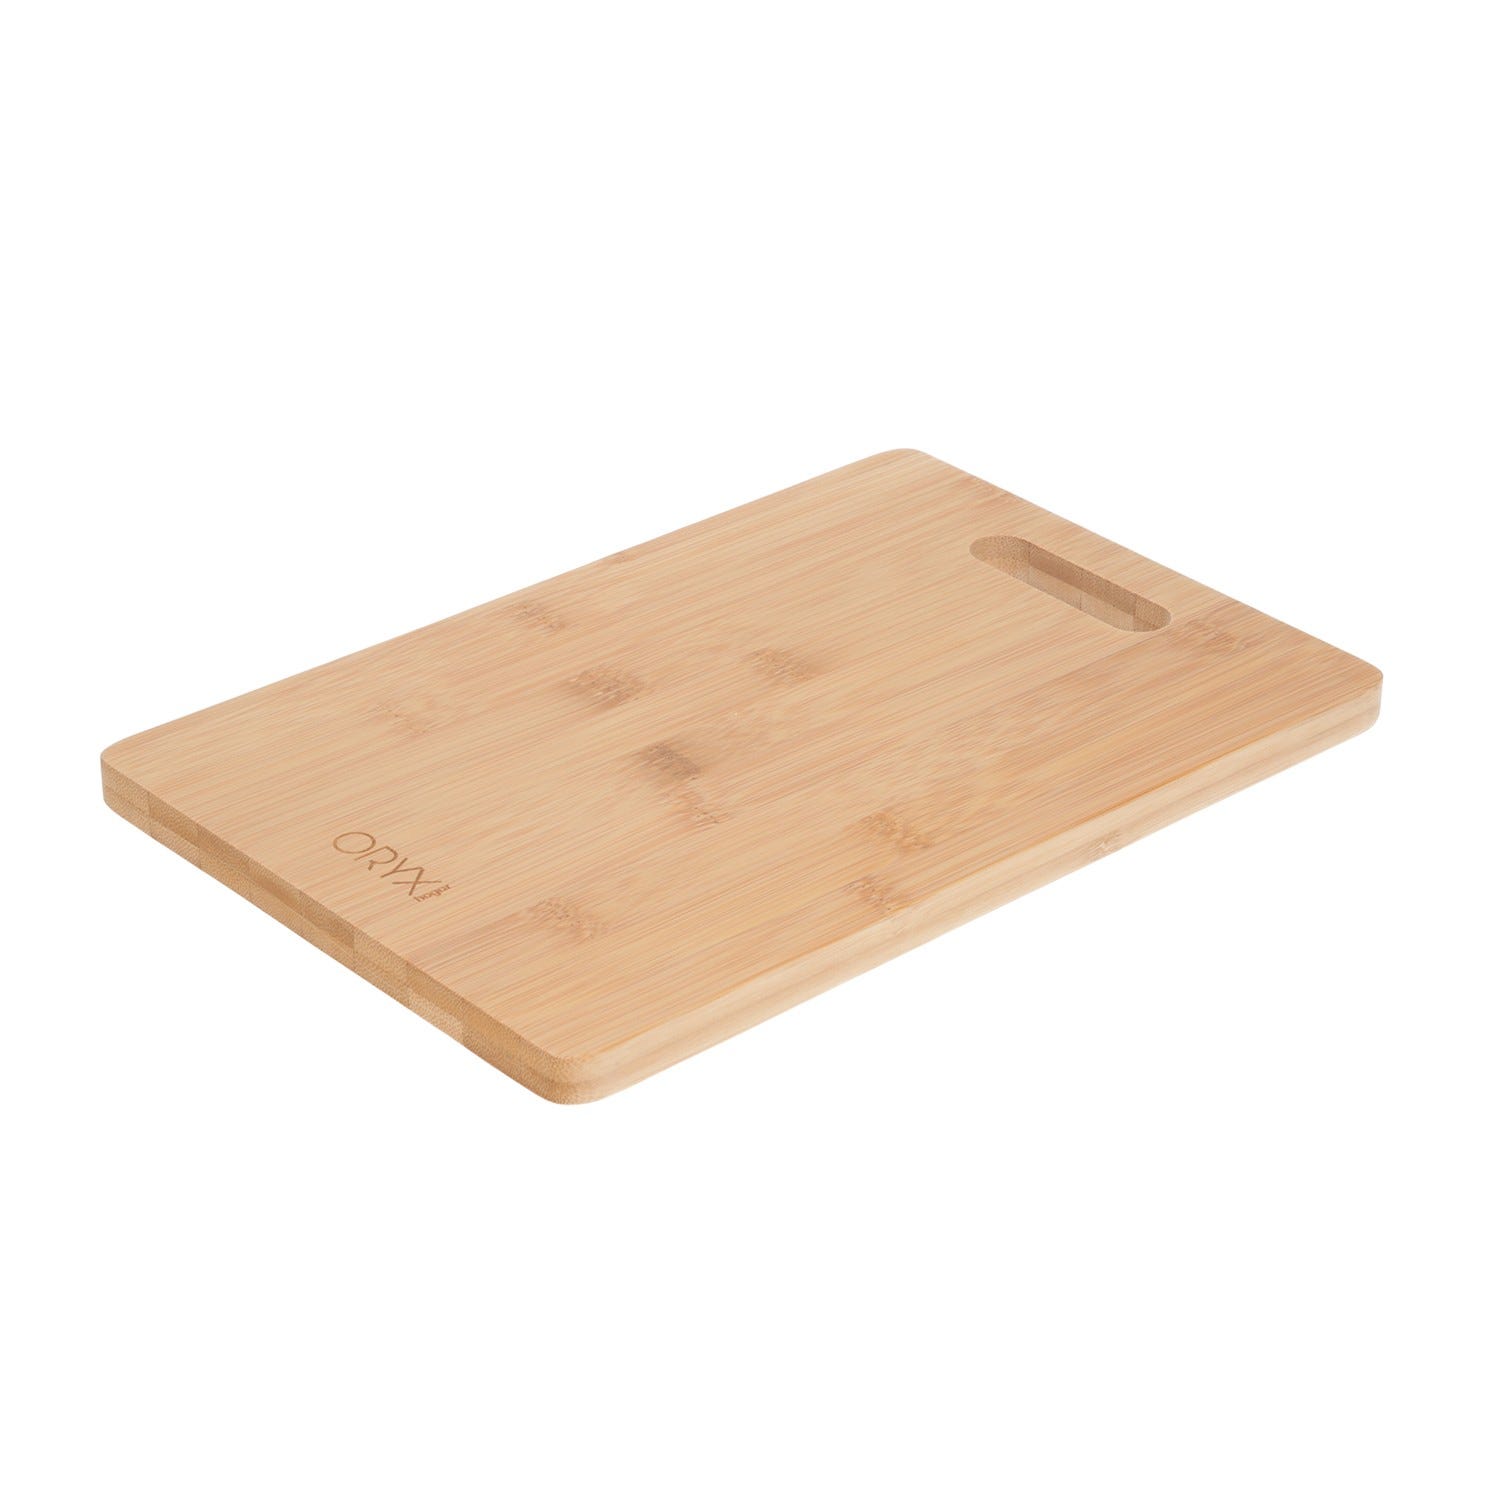 tabla cortar cocina redonda hecha en madera de bambu 100% con mango ø26x36  cm.tabla cortar,carne pescado,verdura,fruta,alimentos